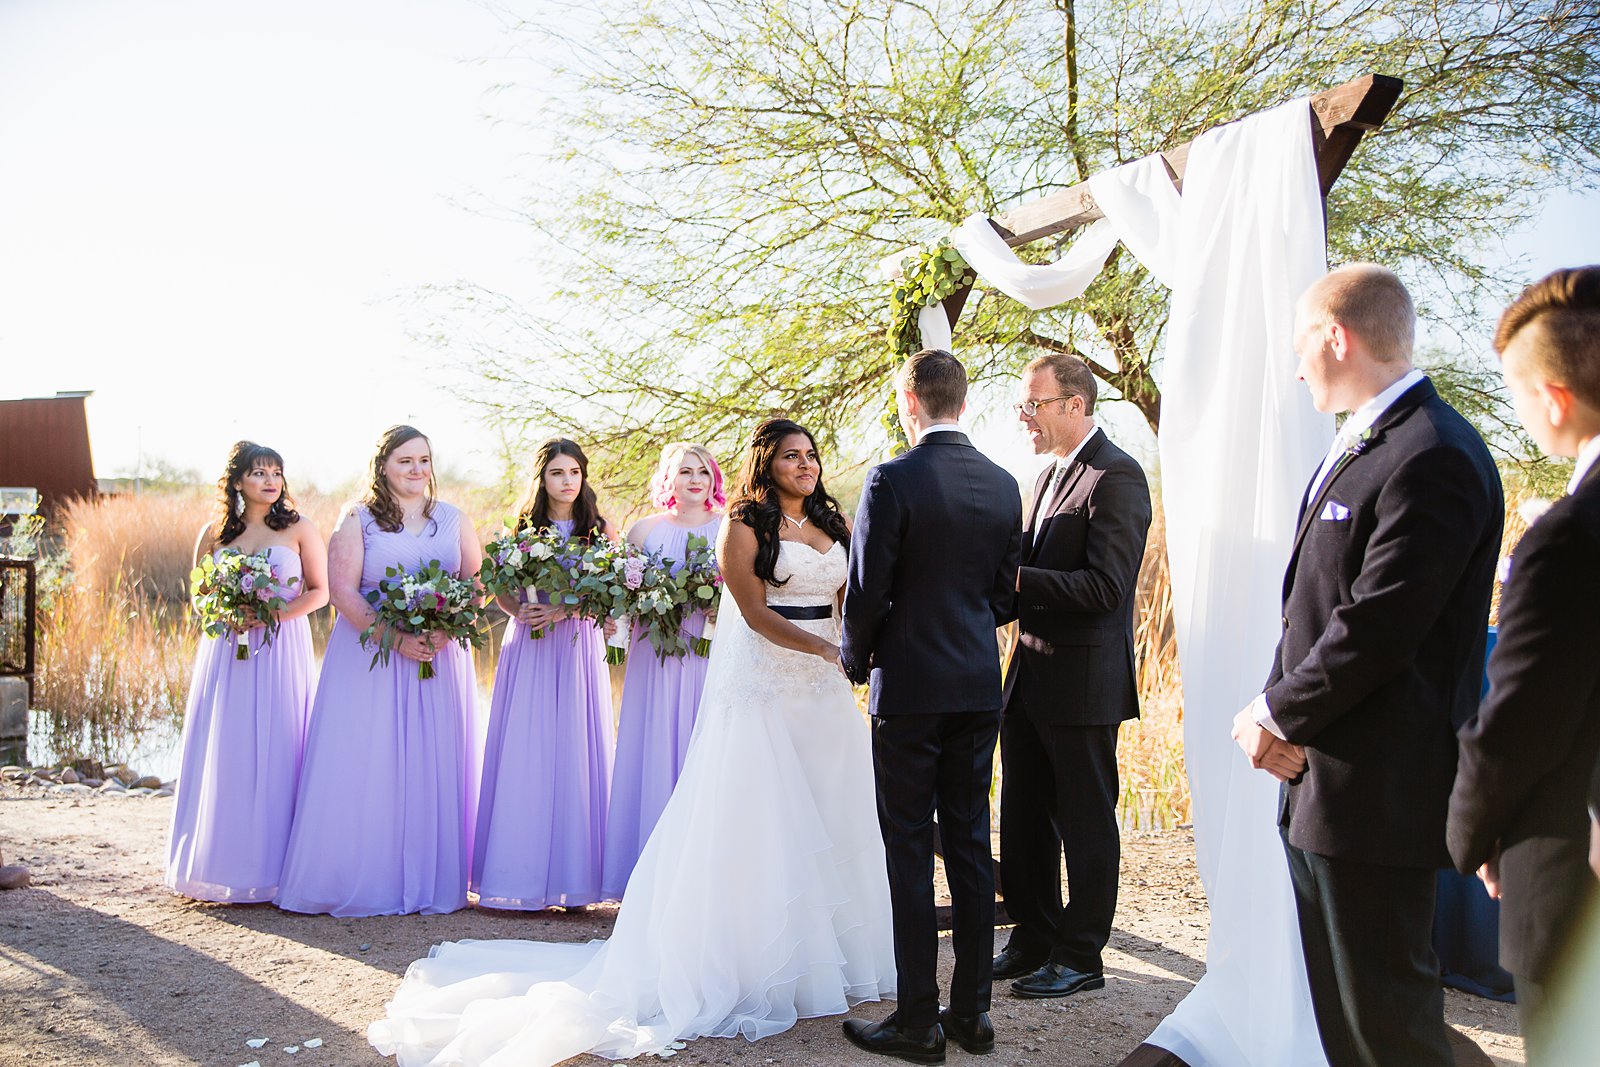 Bride with bridesmaids during Arizona outdoor wedding ceremony by Phoenix wedding photographer PMA Photography.